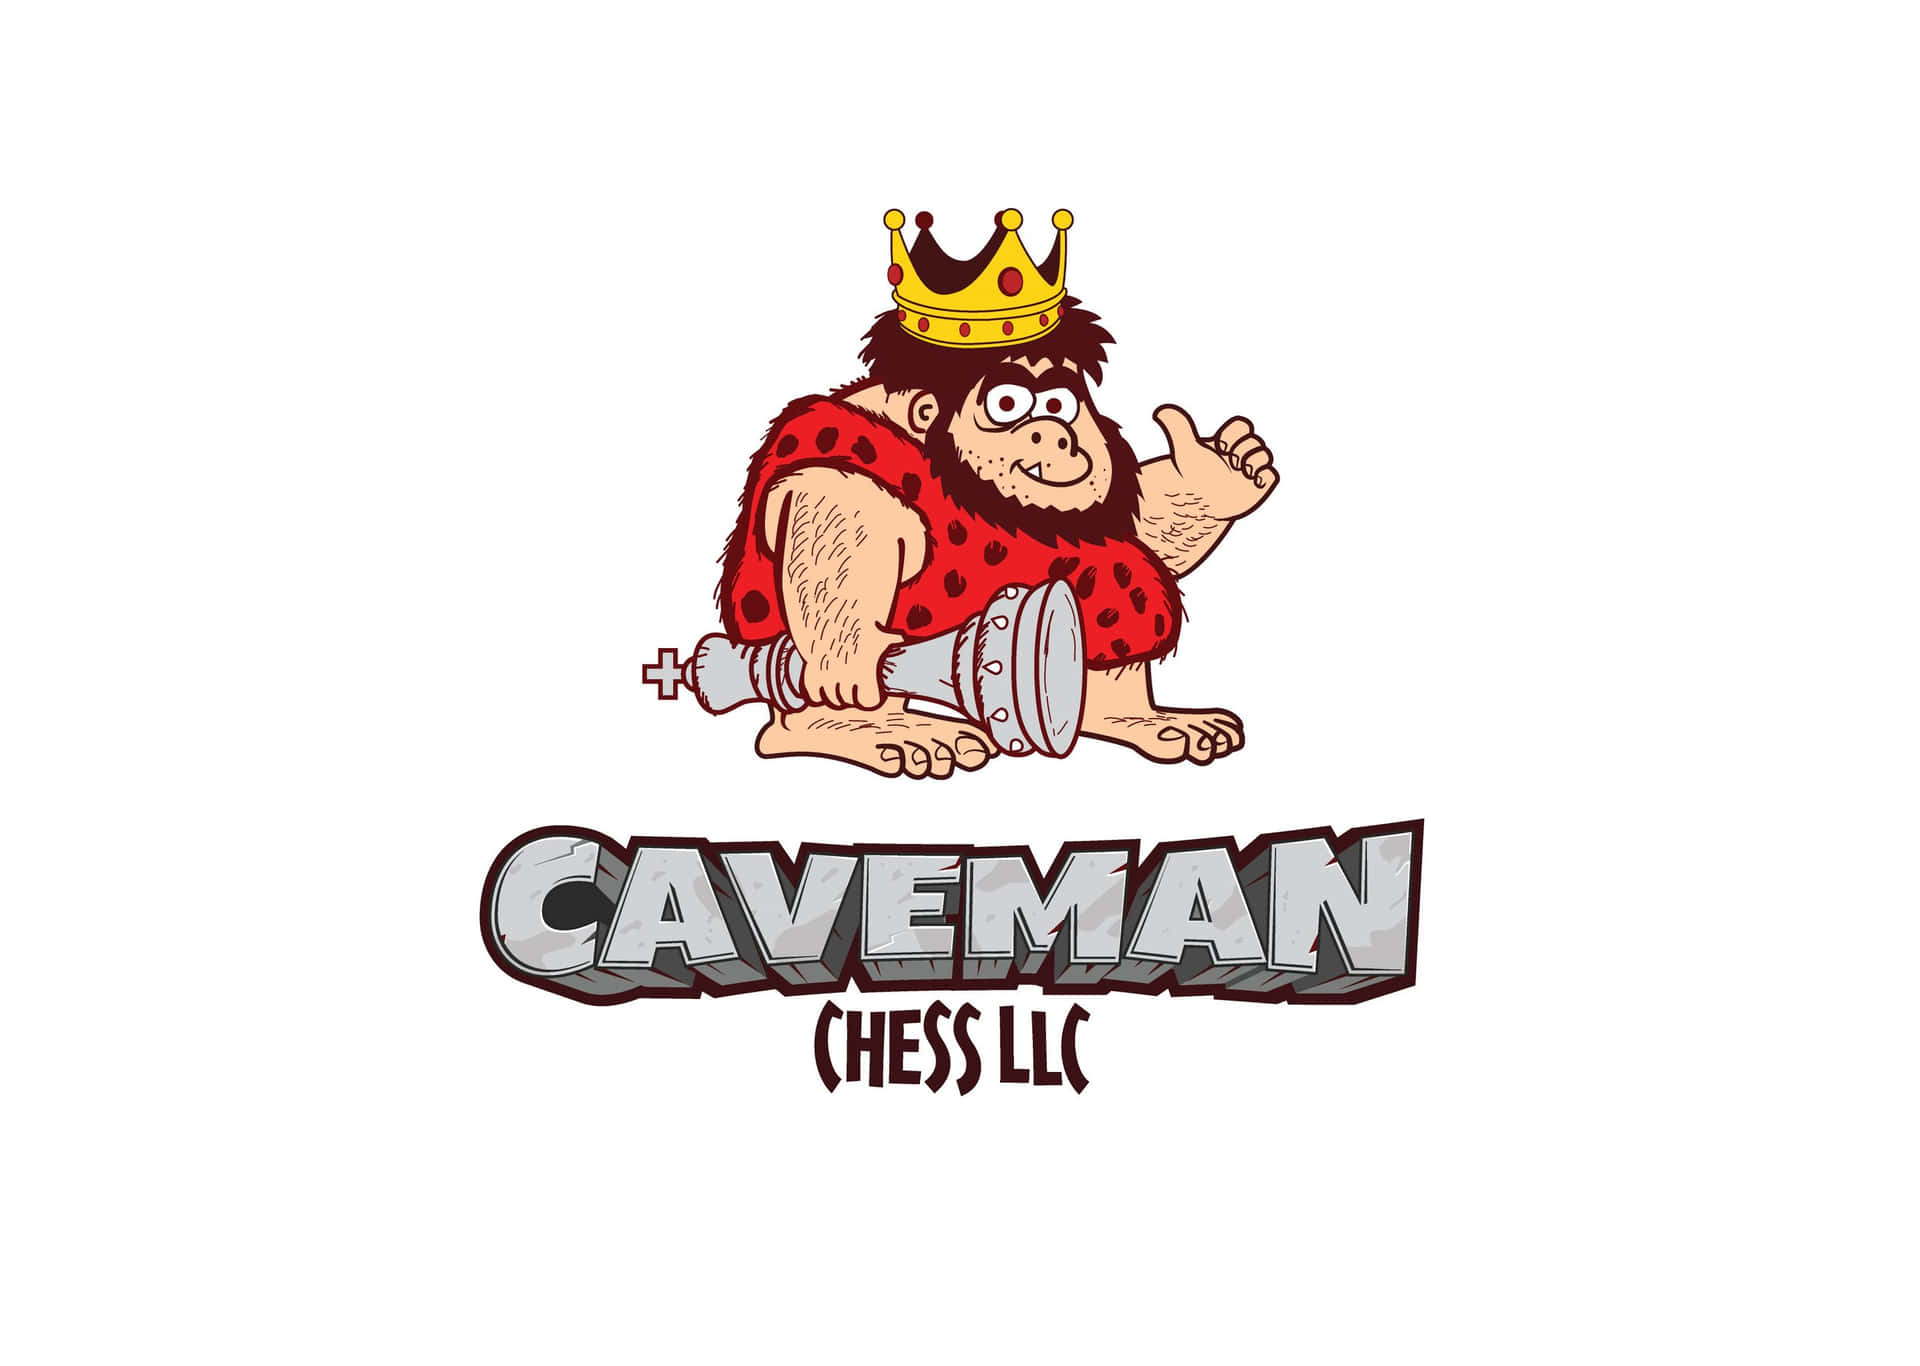 Caveman Chess Logo Design